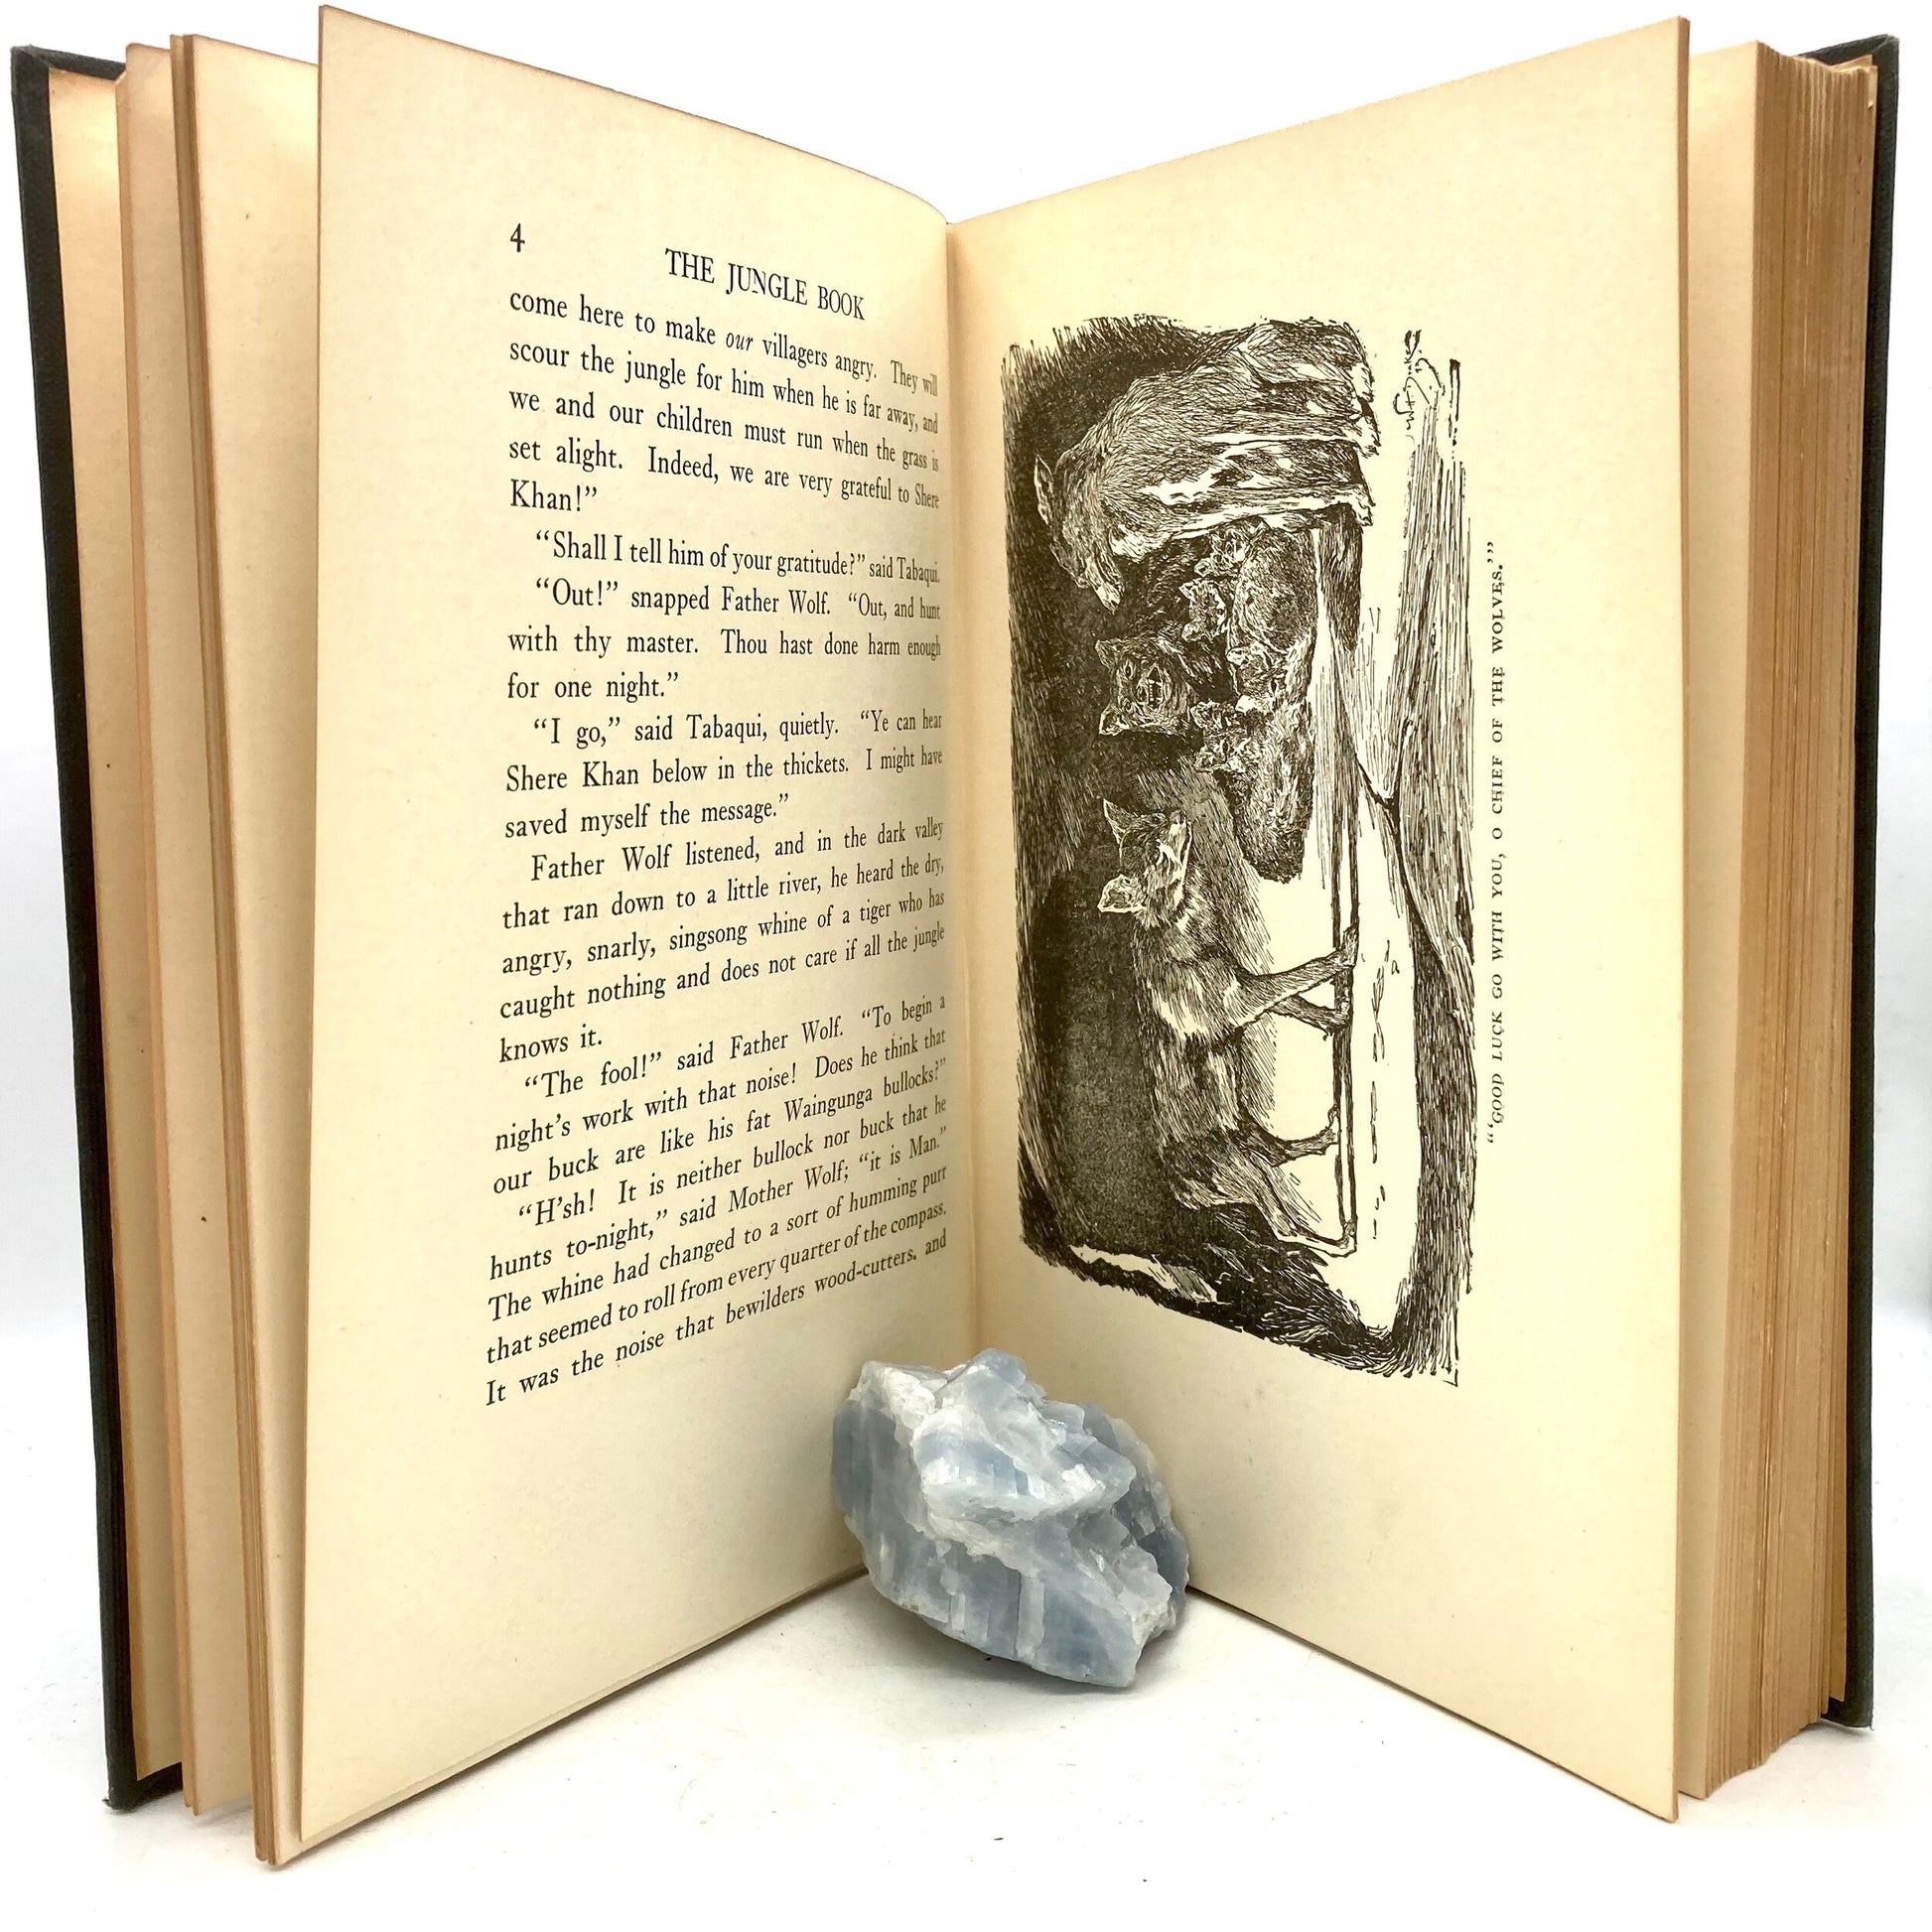 KIPLING, Rudyard "The Jungle Book"/"The Second Jungle Book" [Doubleday, 1924/25] - Buzz Bookstore